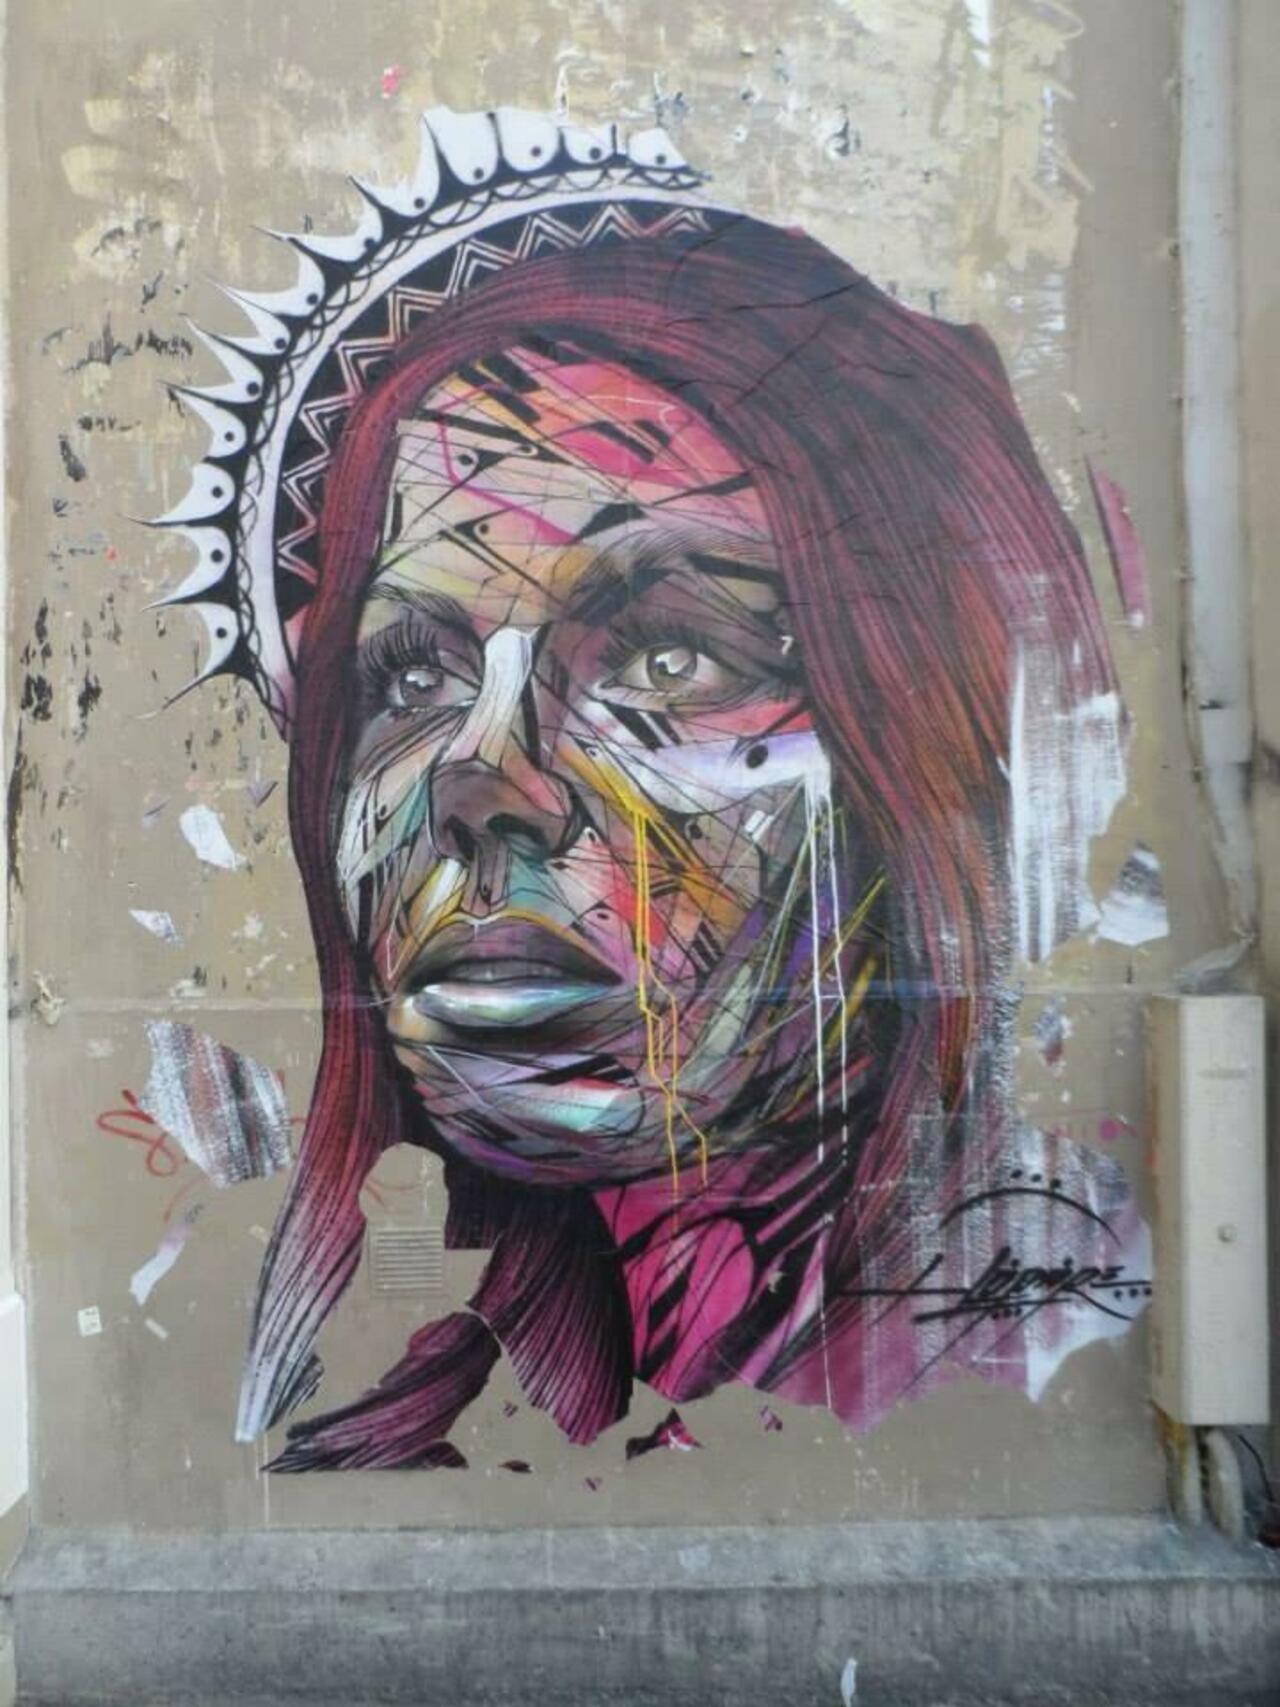 Artist Hopare new signature Street Art portrait located in Paris, France #art #mural #graffiti #streetart http://t.co/gofyMB52lP